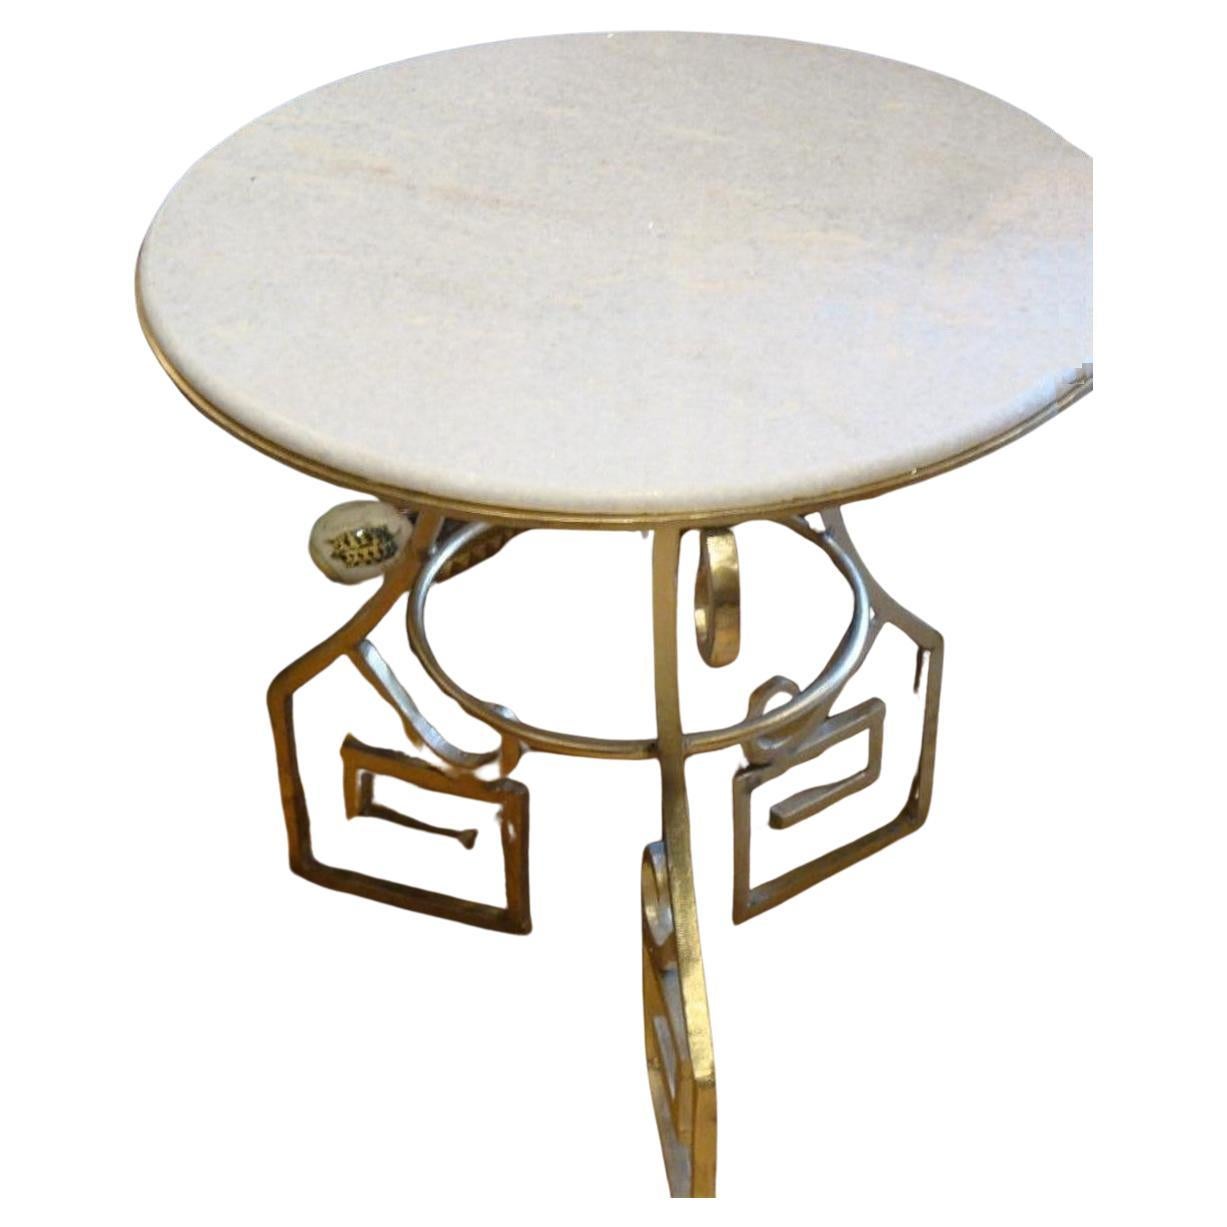 Rare Estate Gilt Art Nouveau Mount Round White Marble Table For Sale